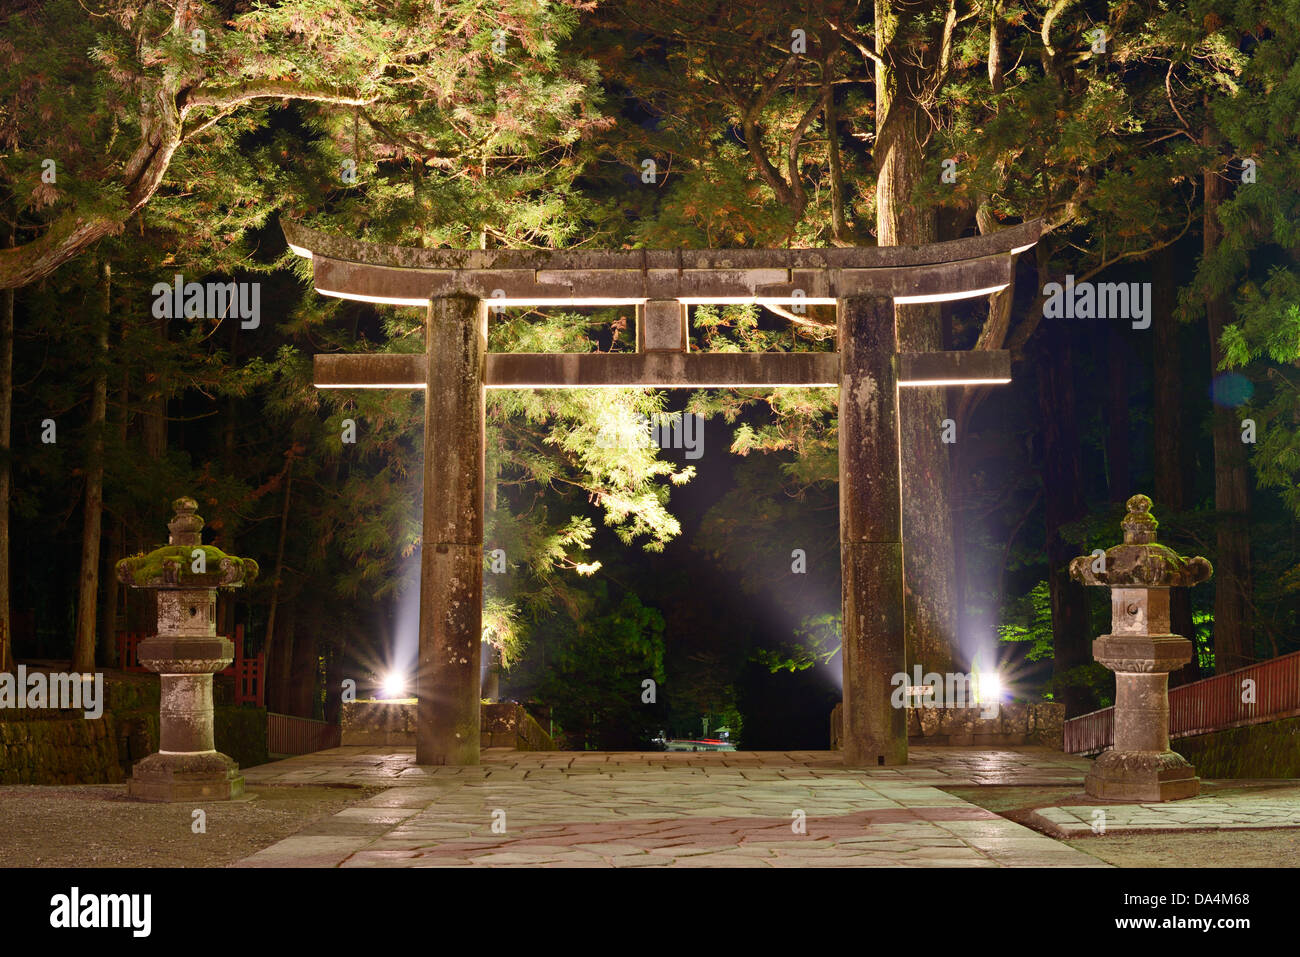 The ishidori is a stone tori gate at Tosho-gu Shrine in Nikko, Japan. Stock Photo